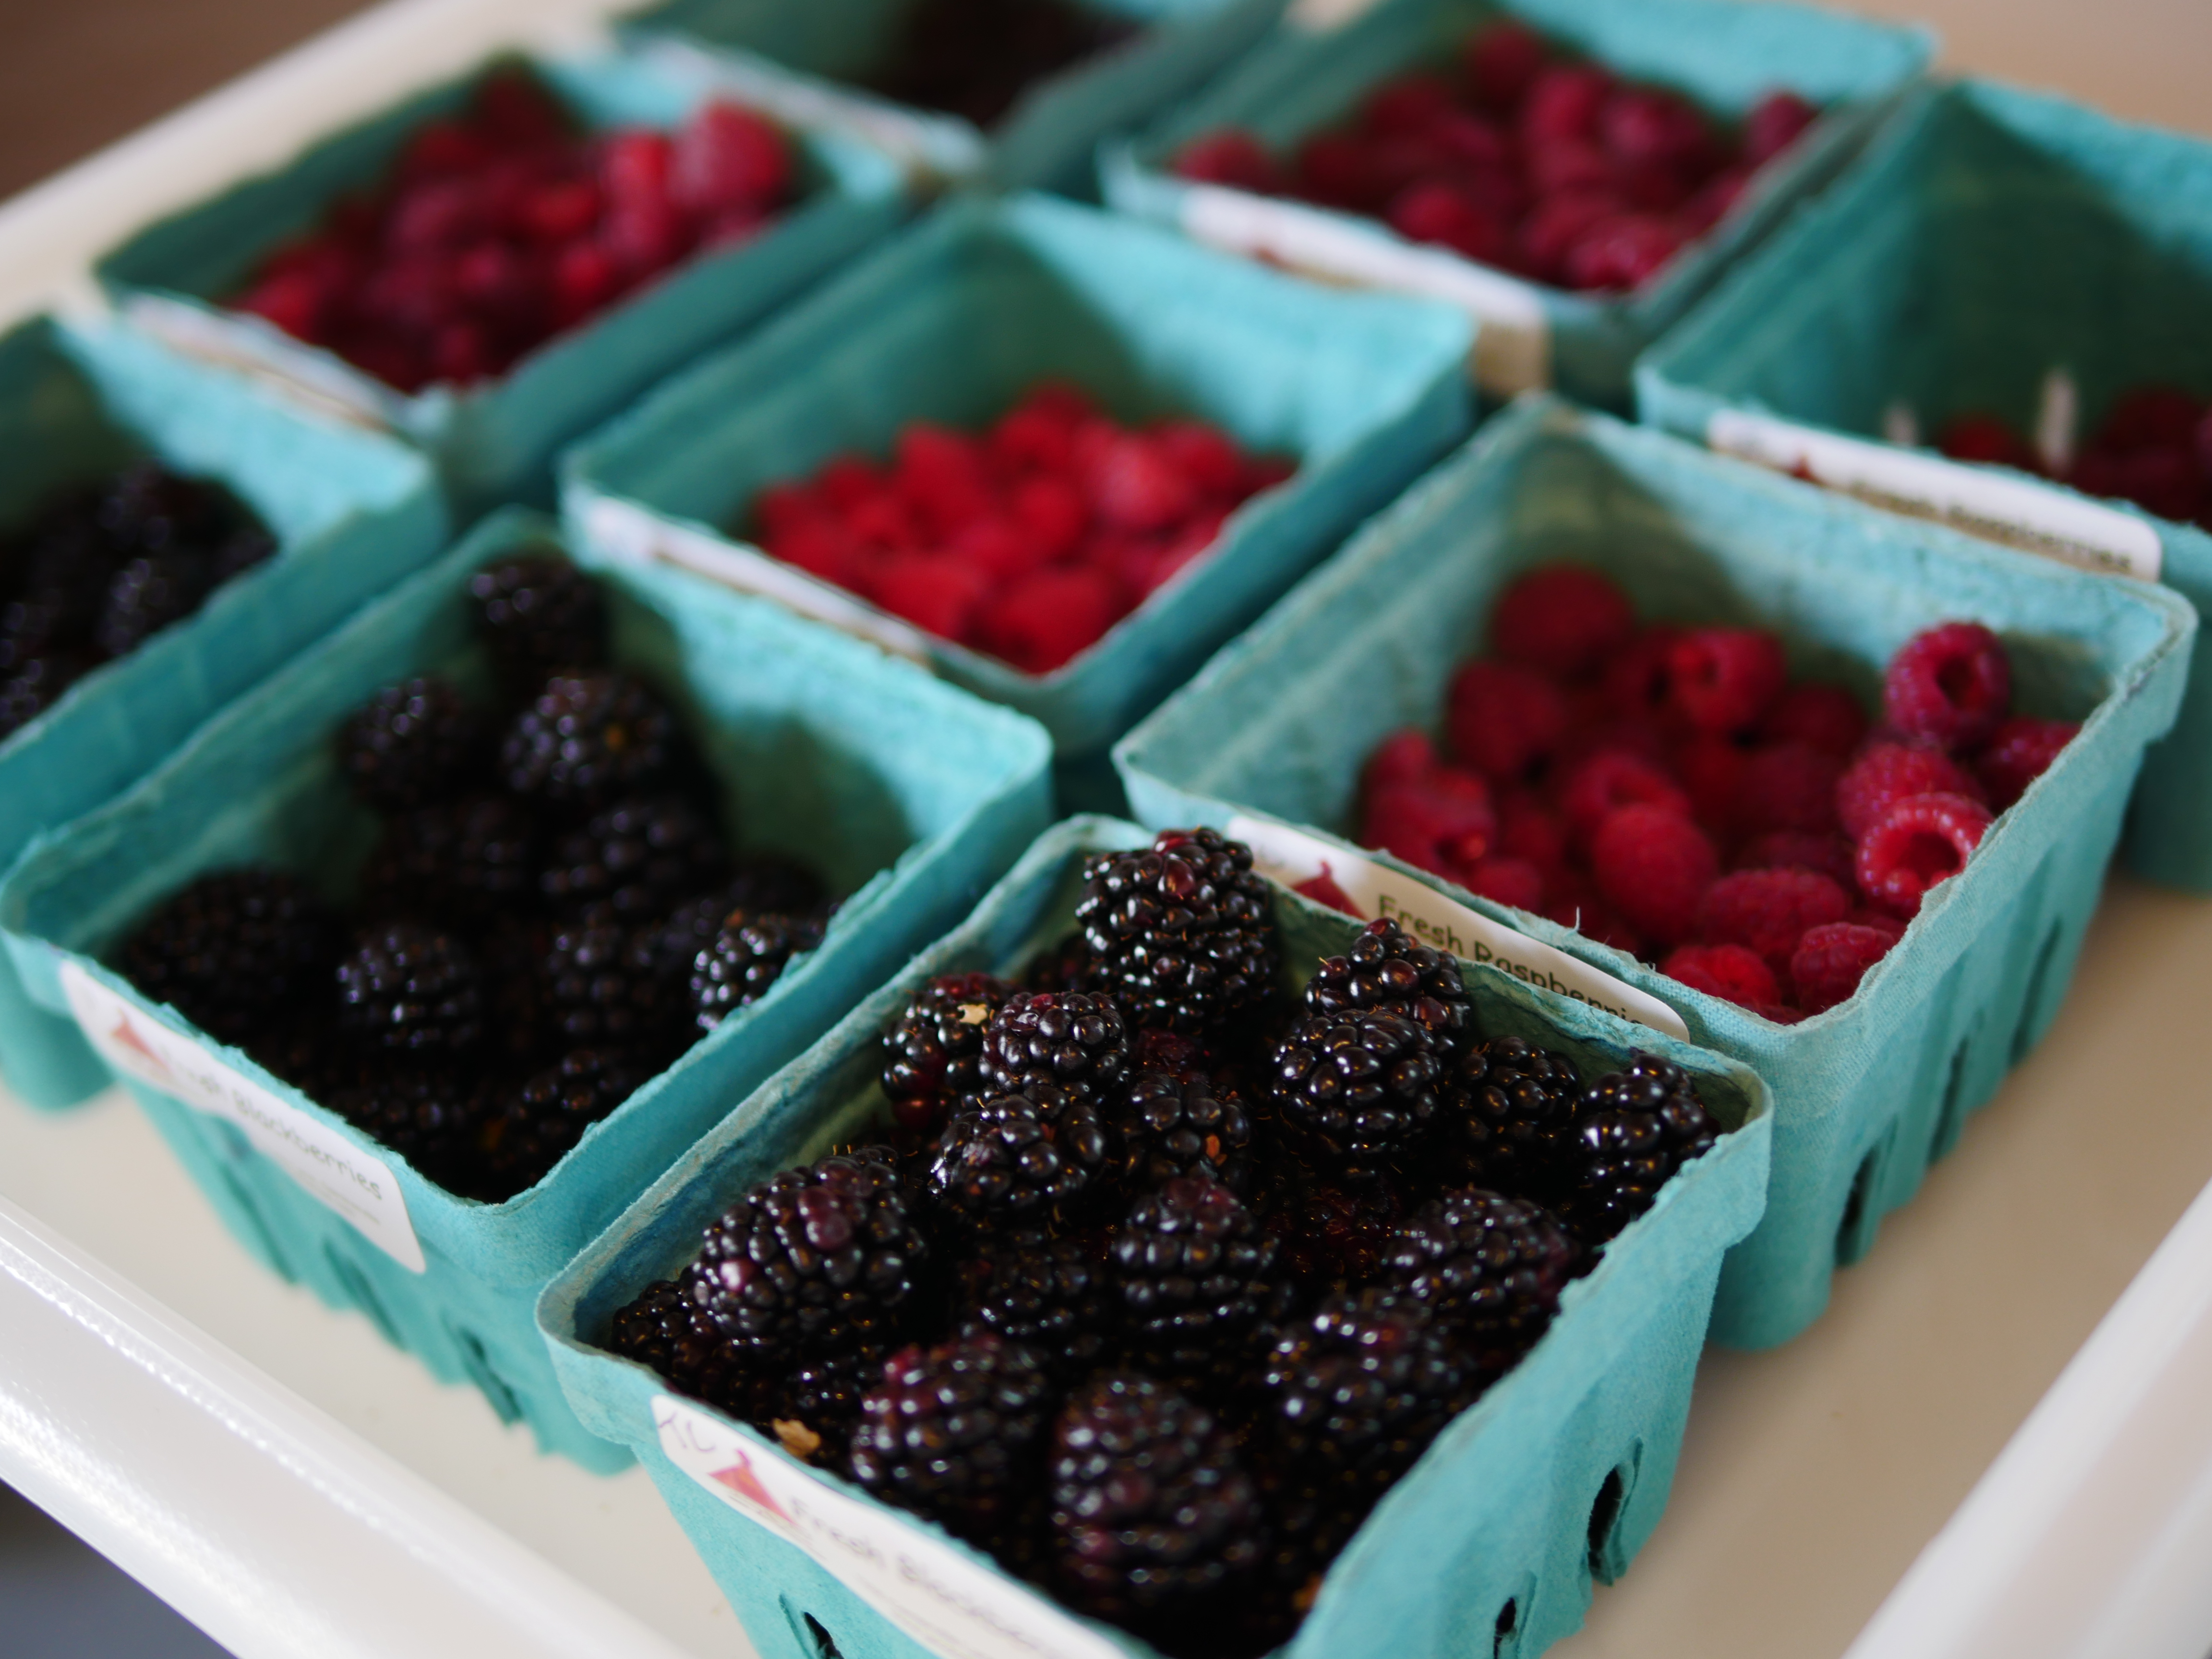 Specialty Crops - berries